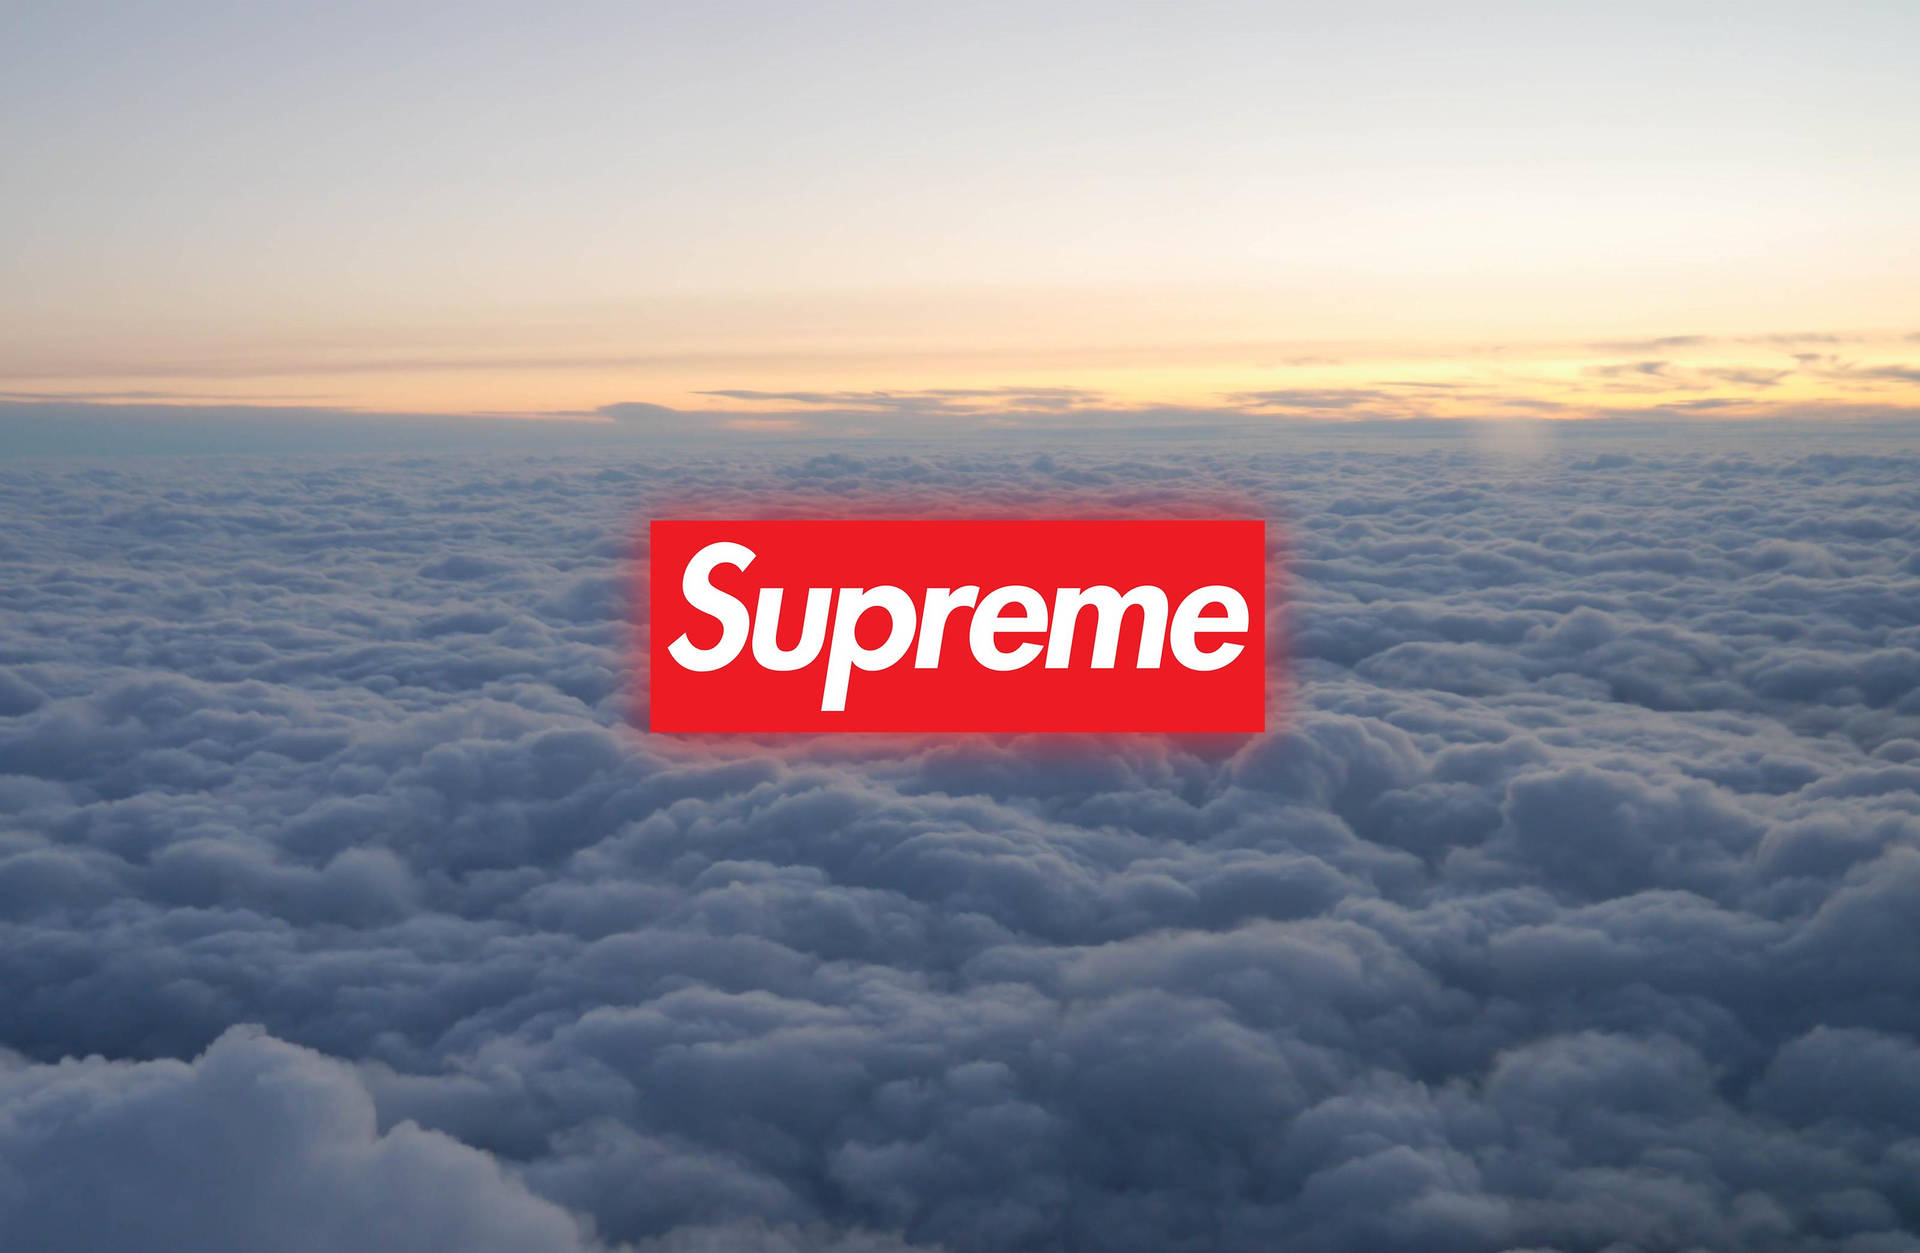 Supreme On Clouds